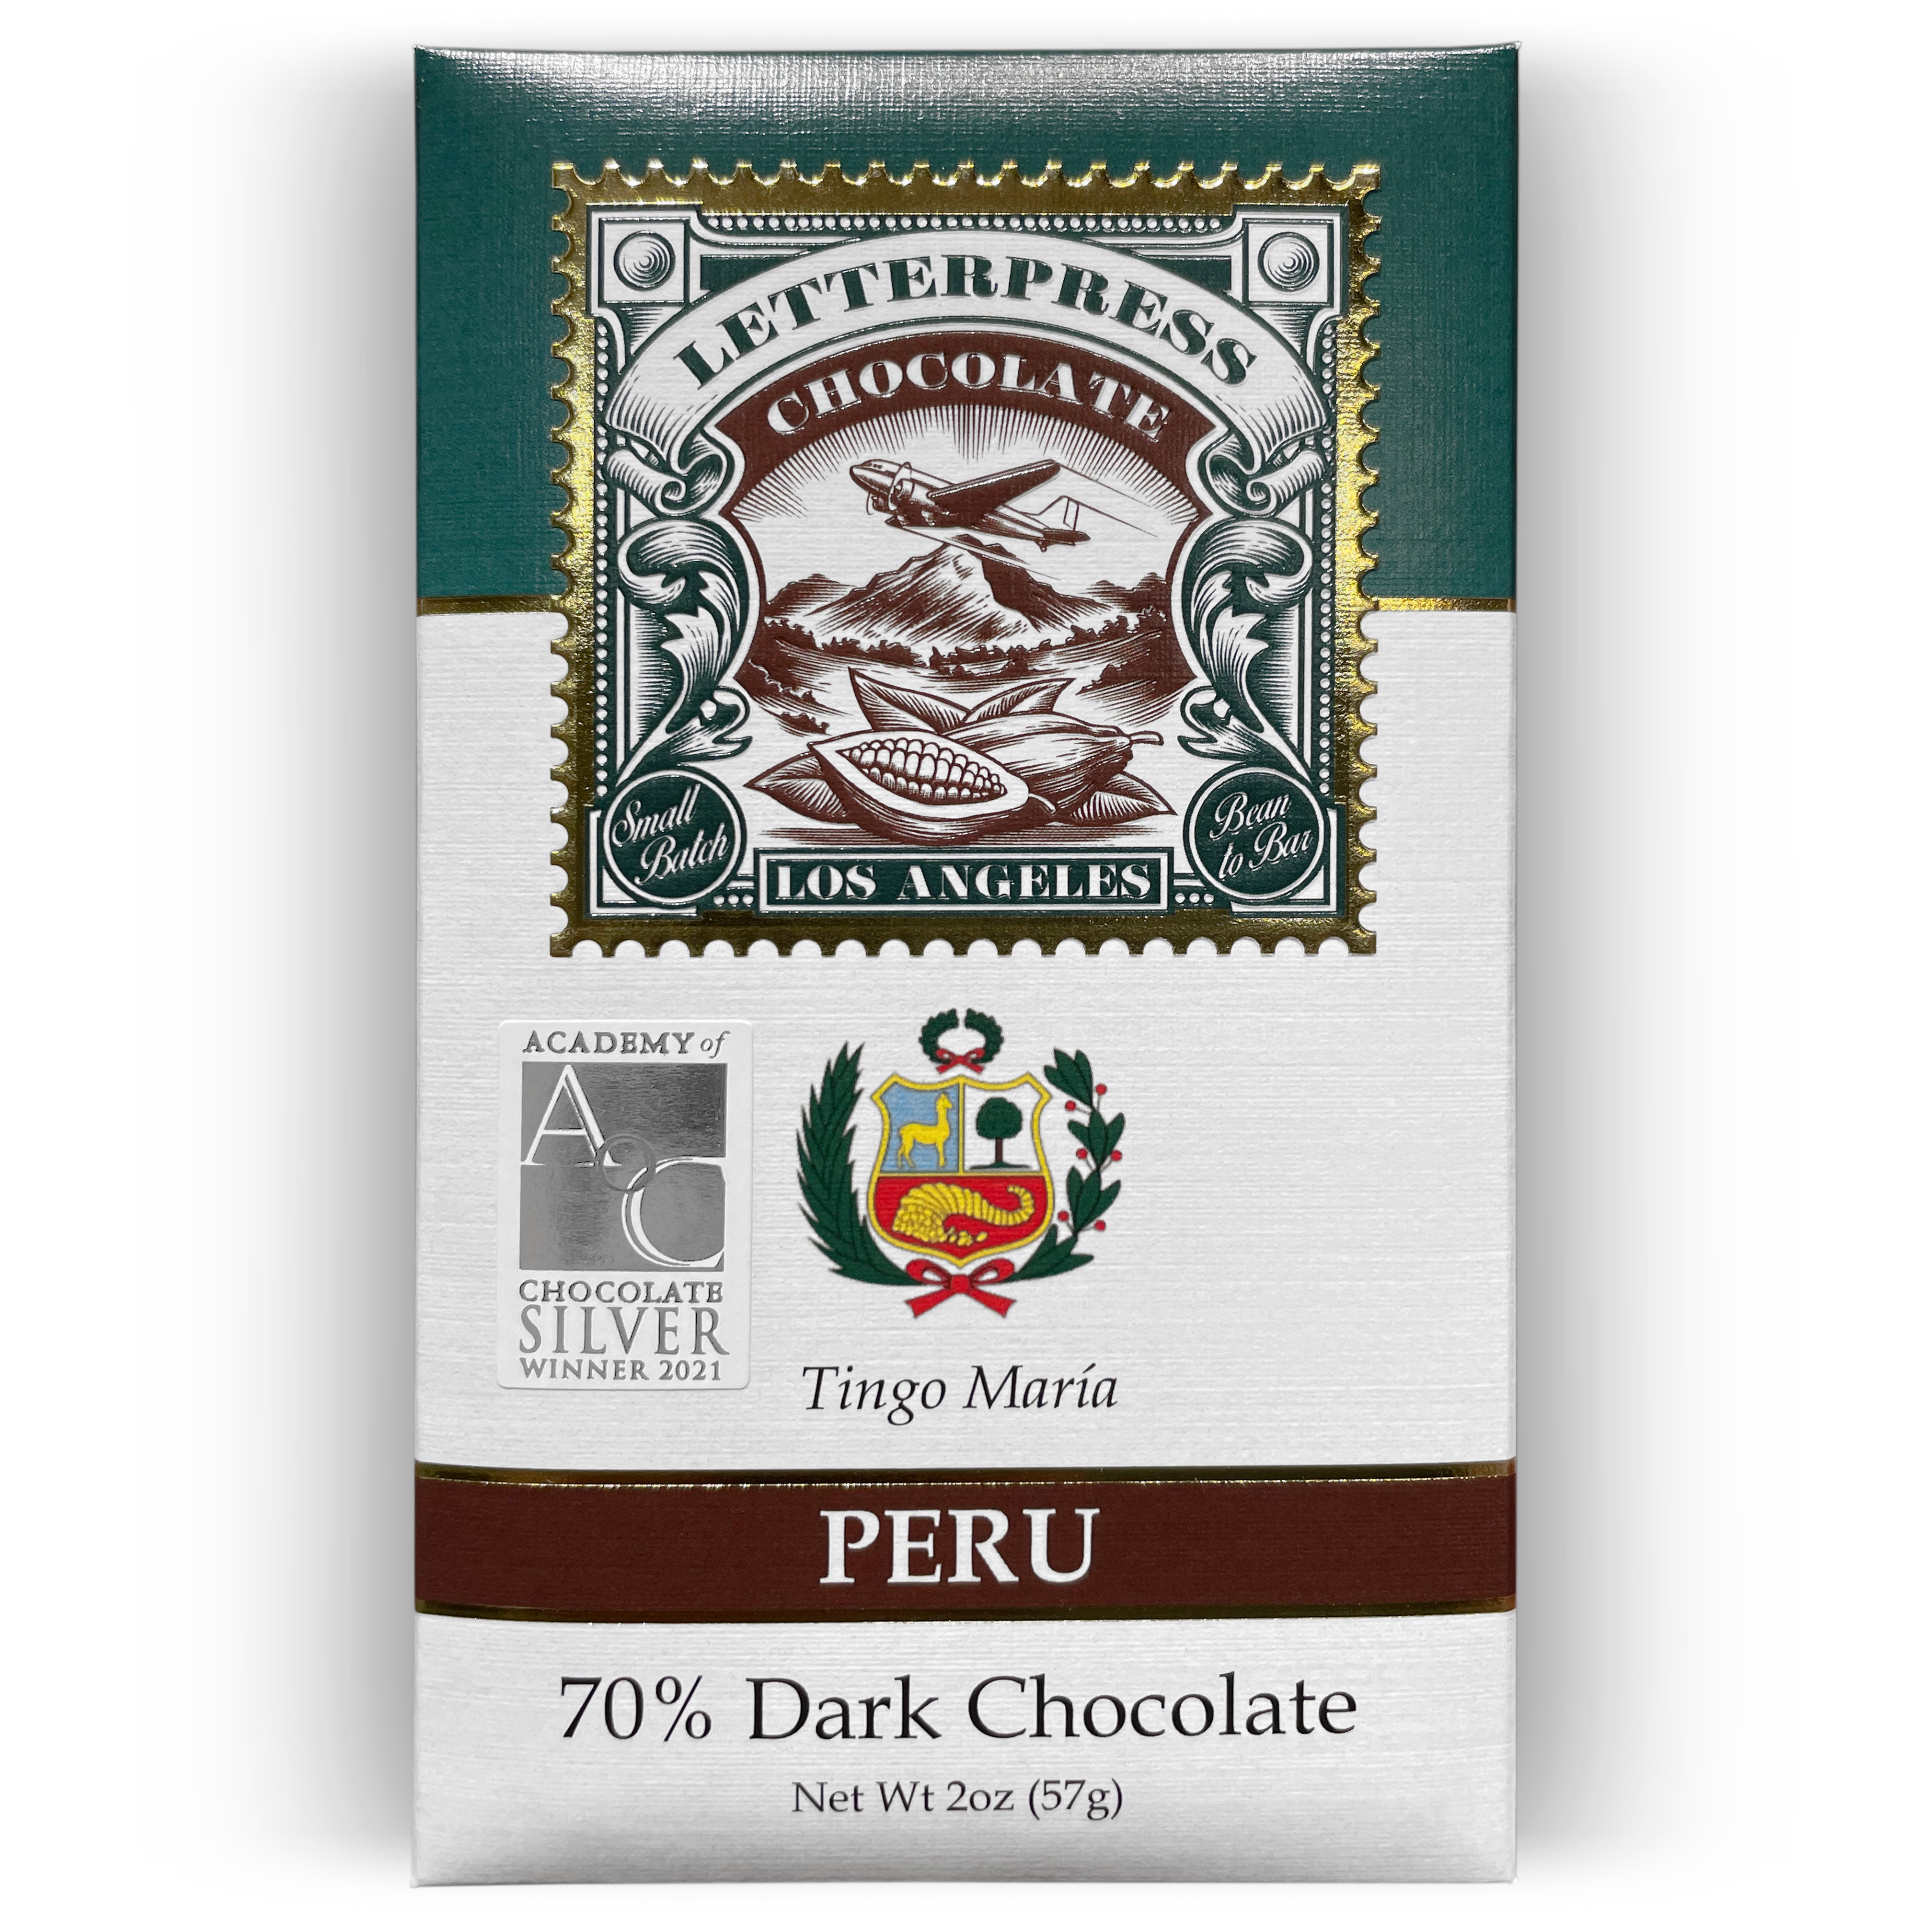 Tingo Maria Peru 70% Dark Chocolate packaging on a white background